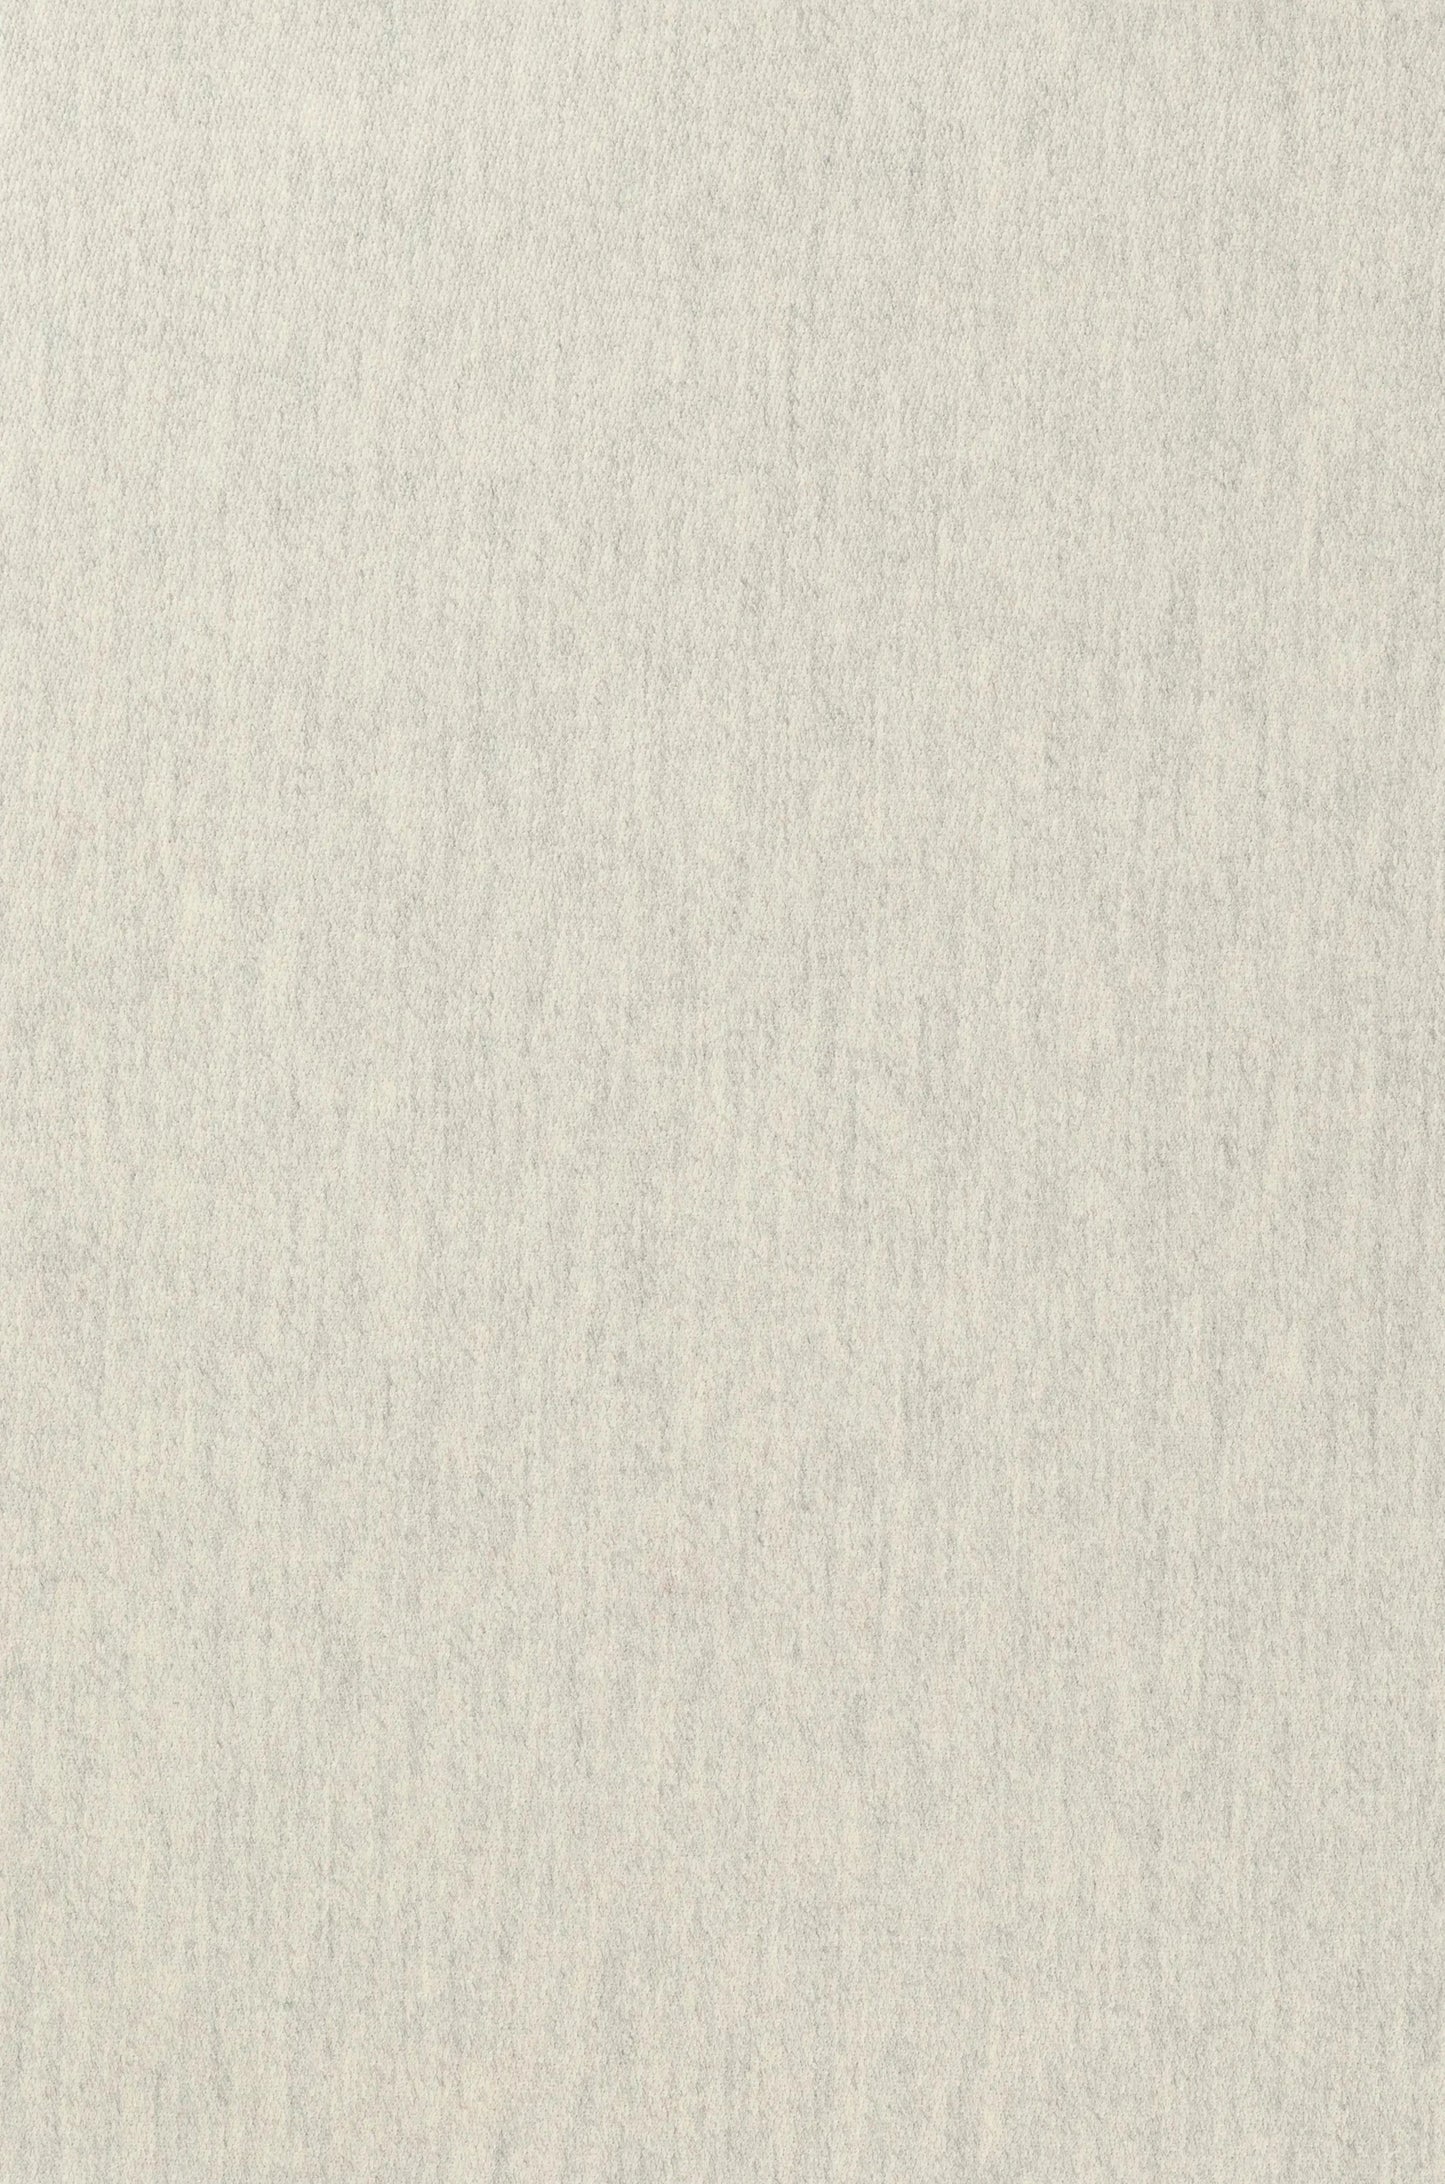 Tivoli Mélange Sateen Merino Wool Fabric in Frost CD000526 UE321715